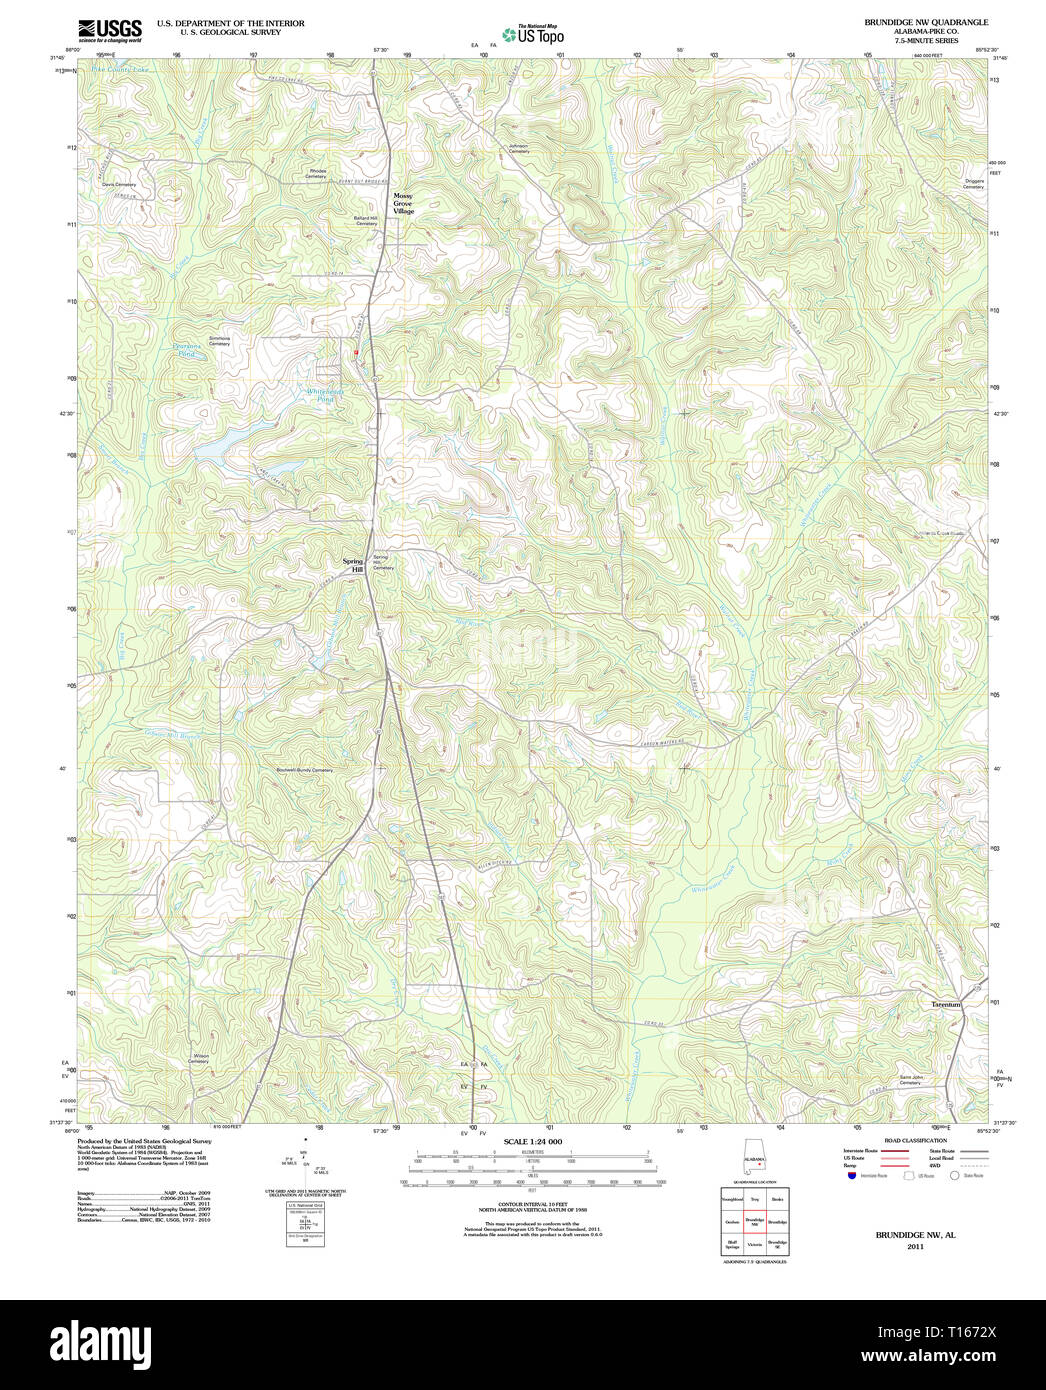 USGS TOPO Map Alabama AL Brundidge NW 20110912 TM Stock Photo